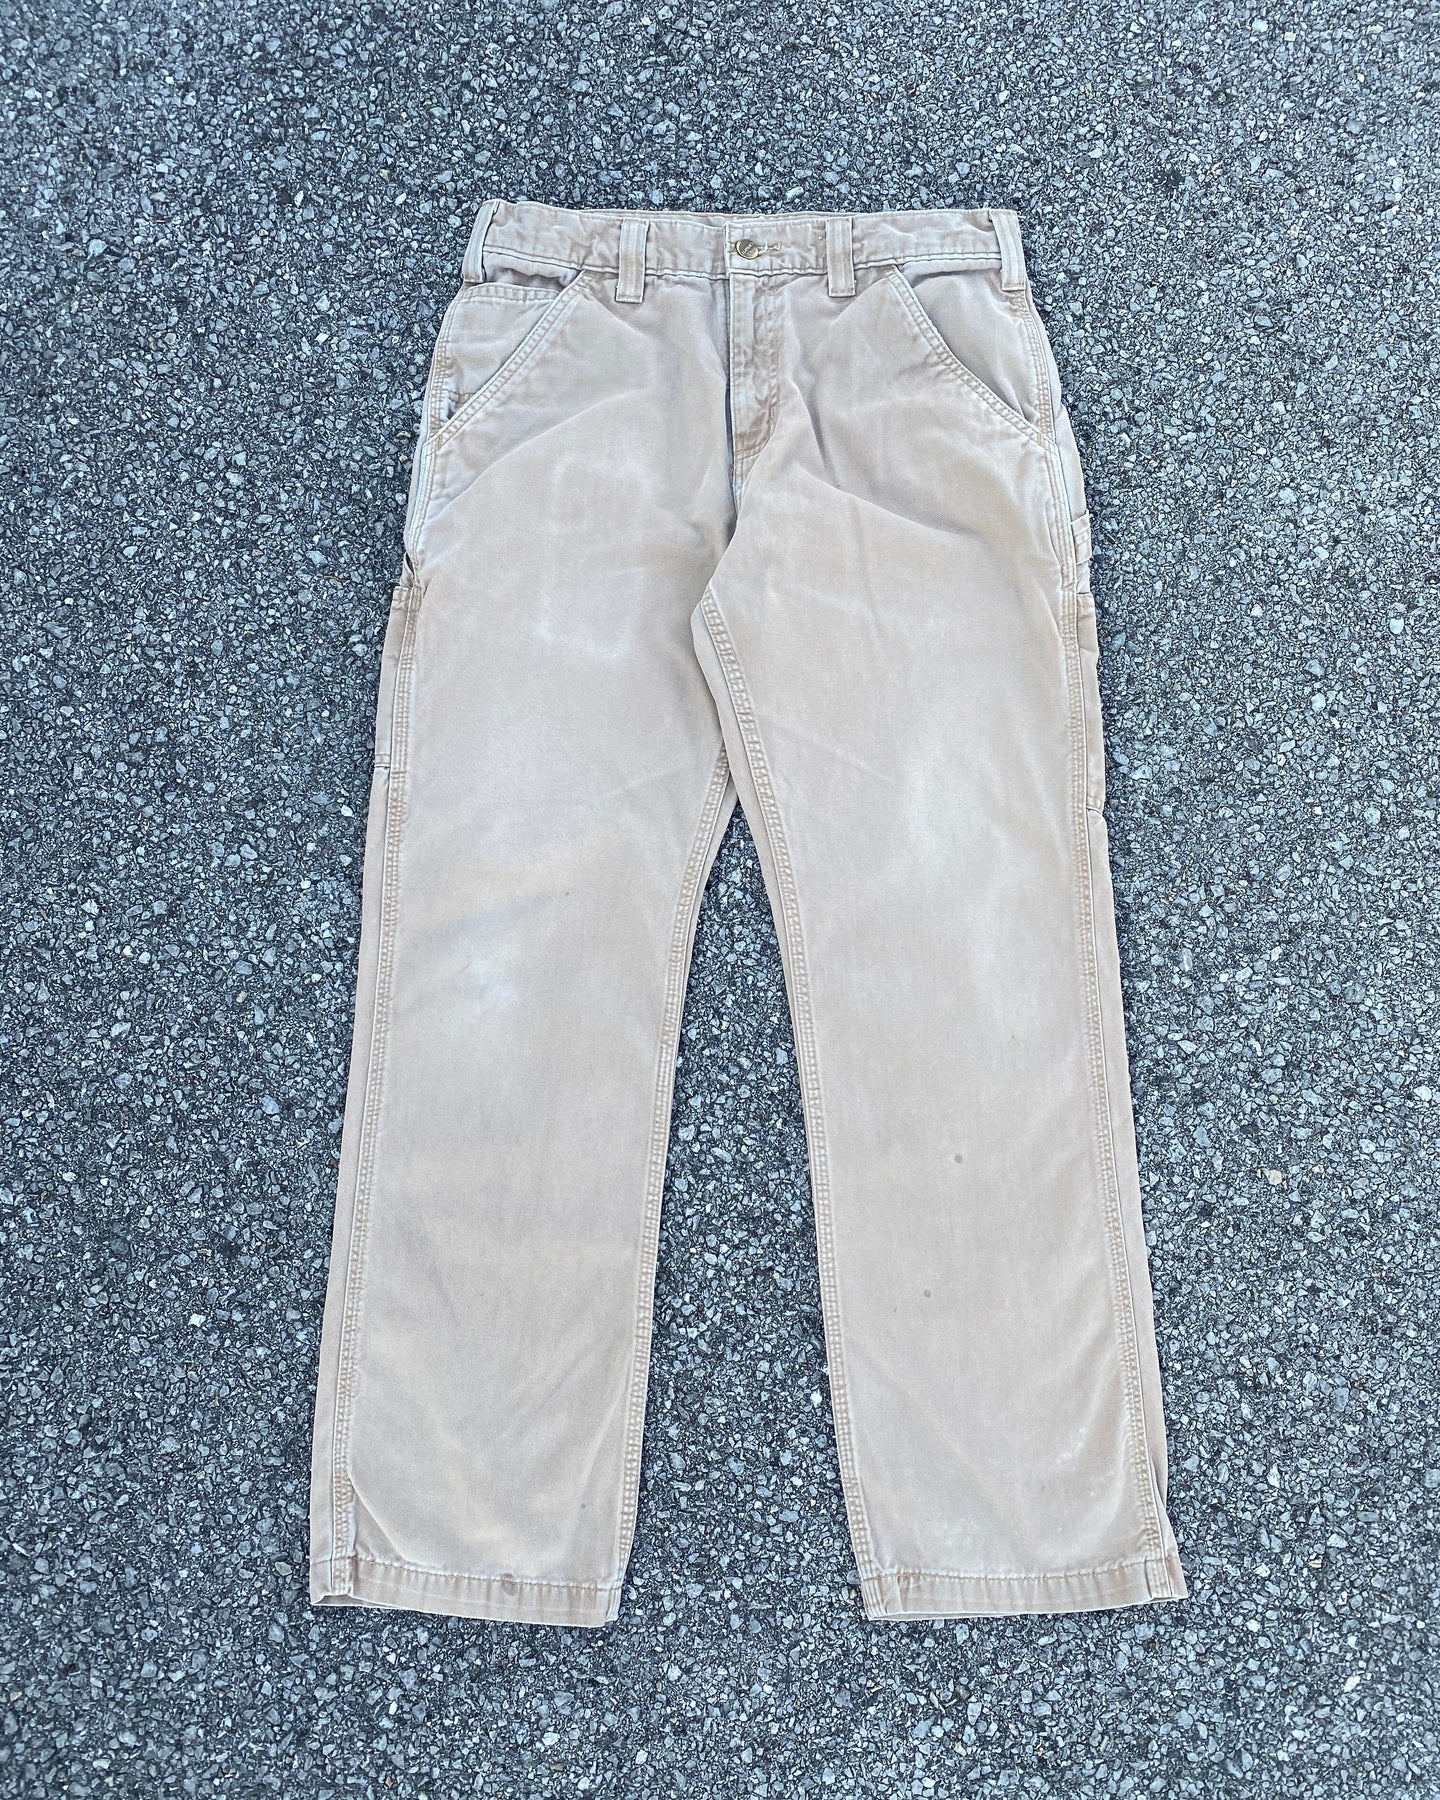 1990s Carhartt Cotton Twill Khaki Pants - Size 31 x 29